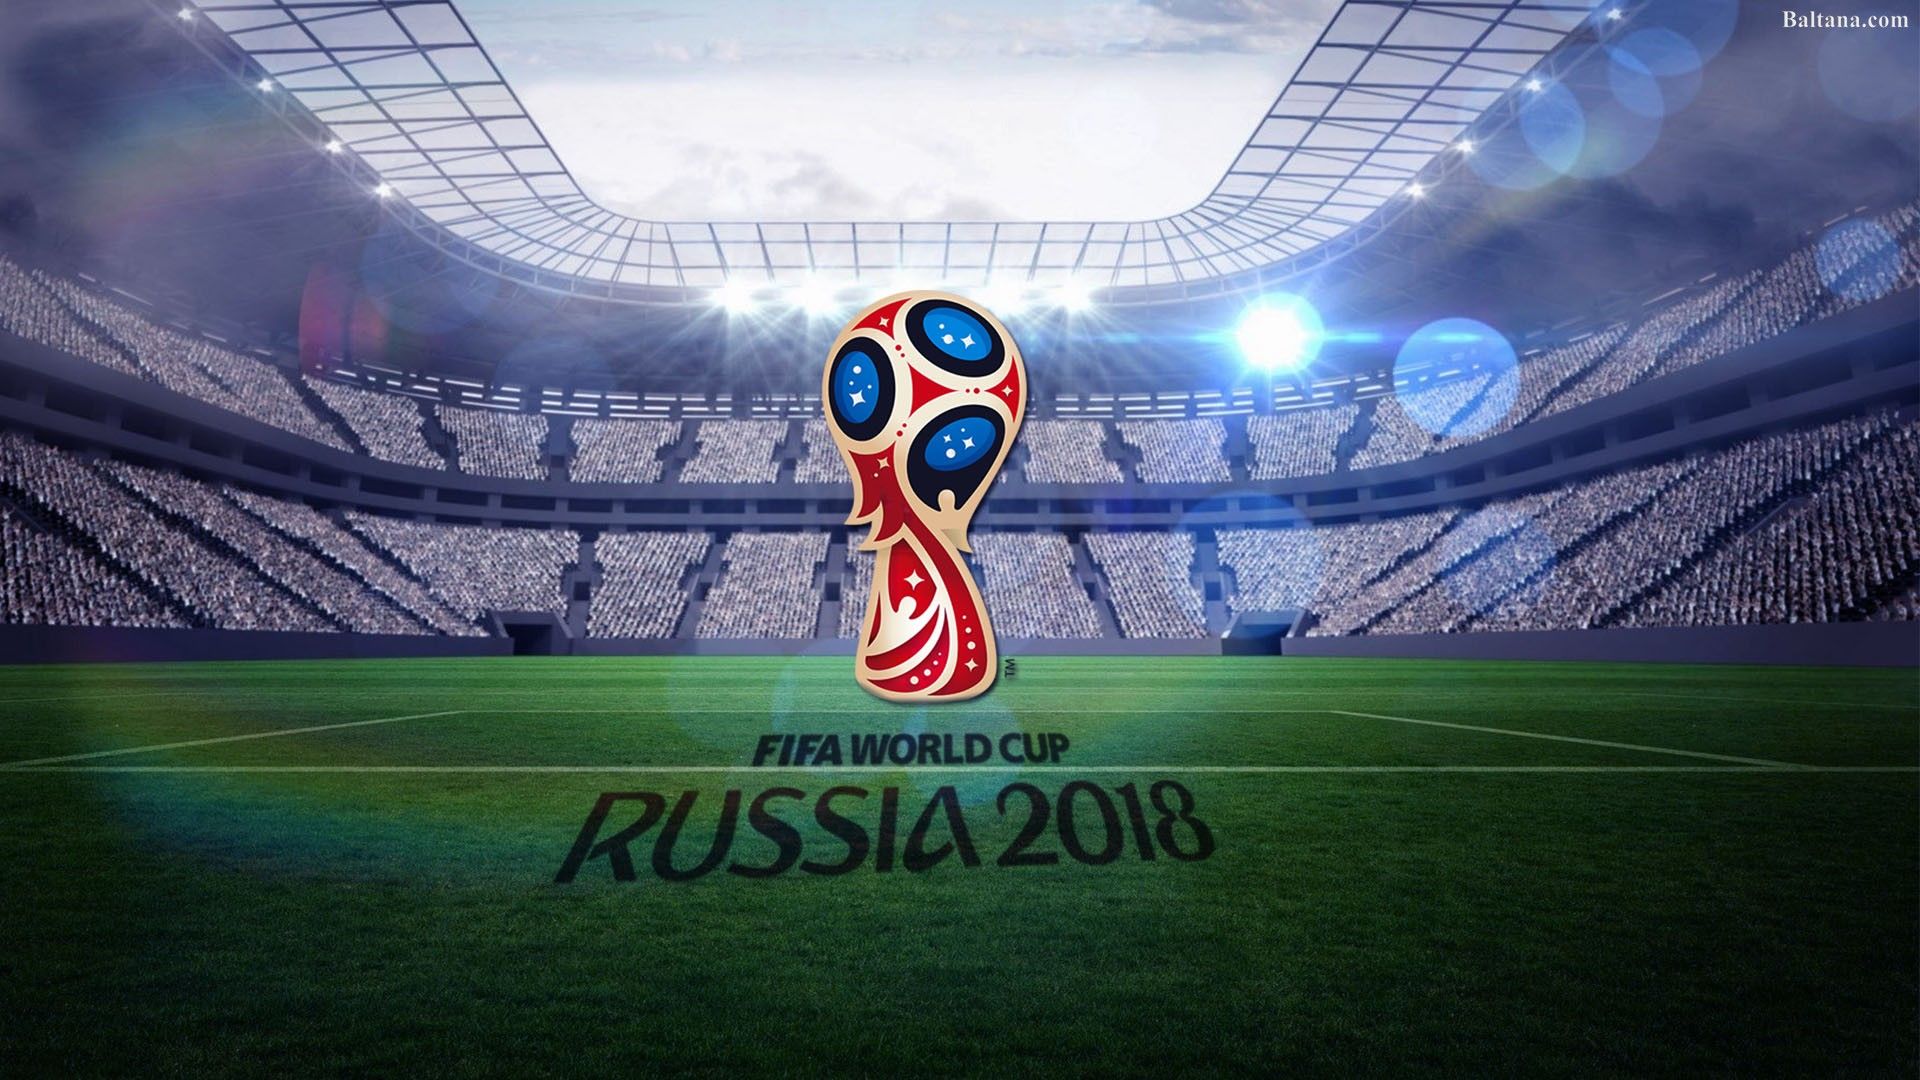 FIFA World Cup Background .baltana.com